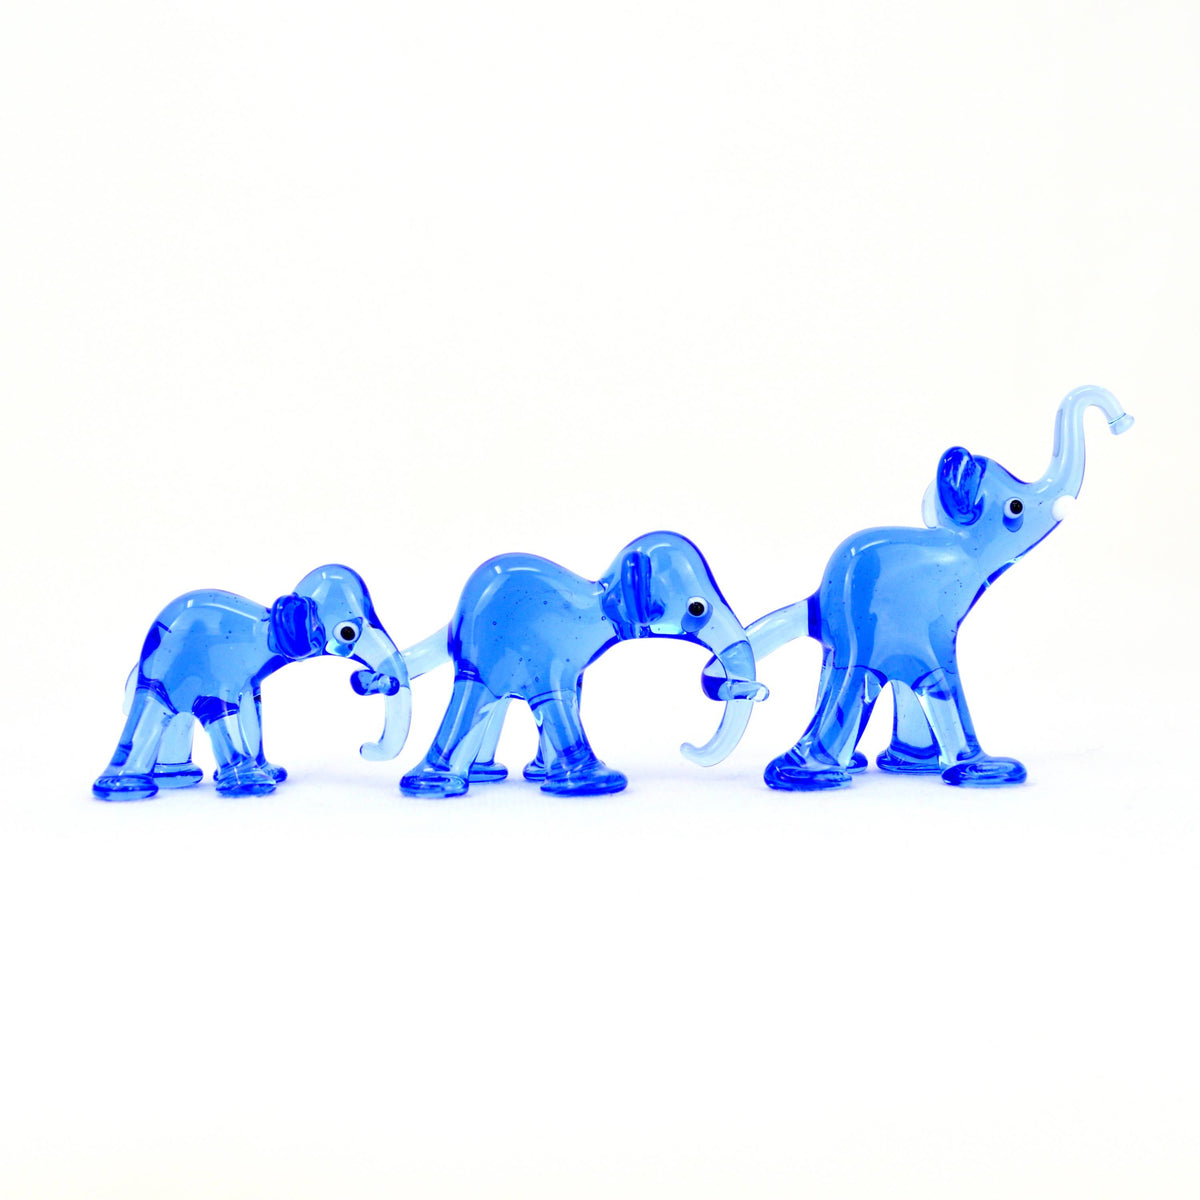 Murano Glass Elephant Family, Set of 3, Handcrafted In Italy - My Italian Decor